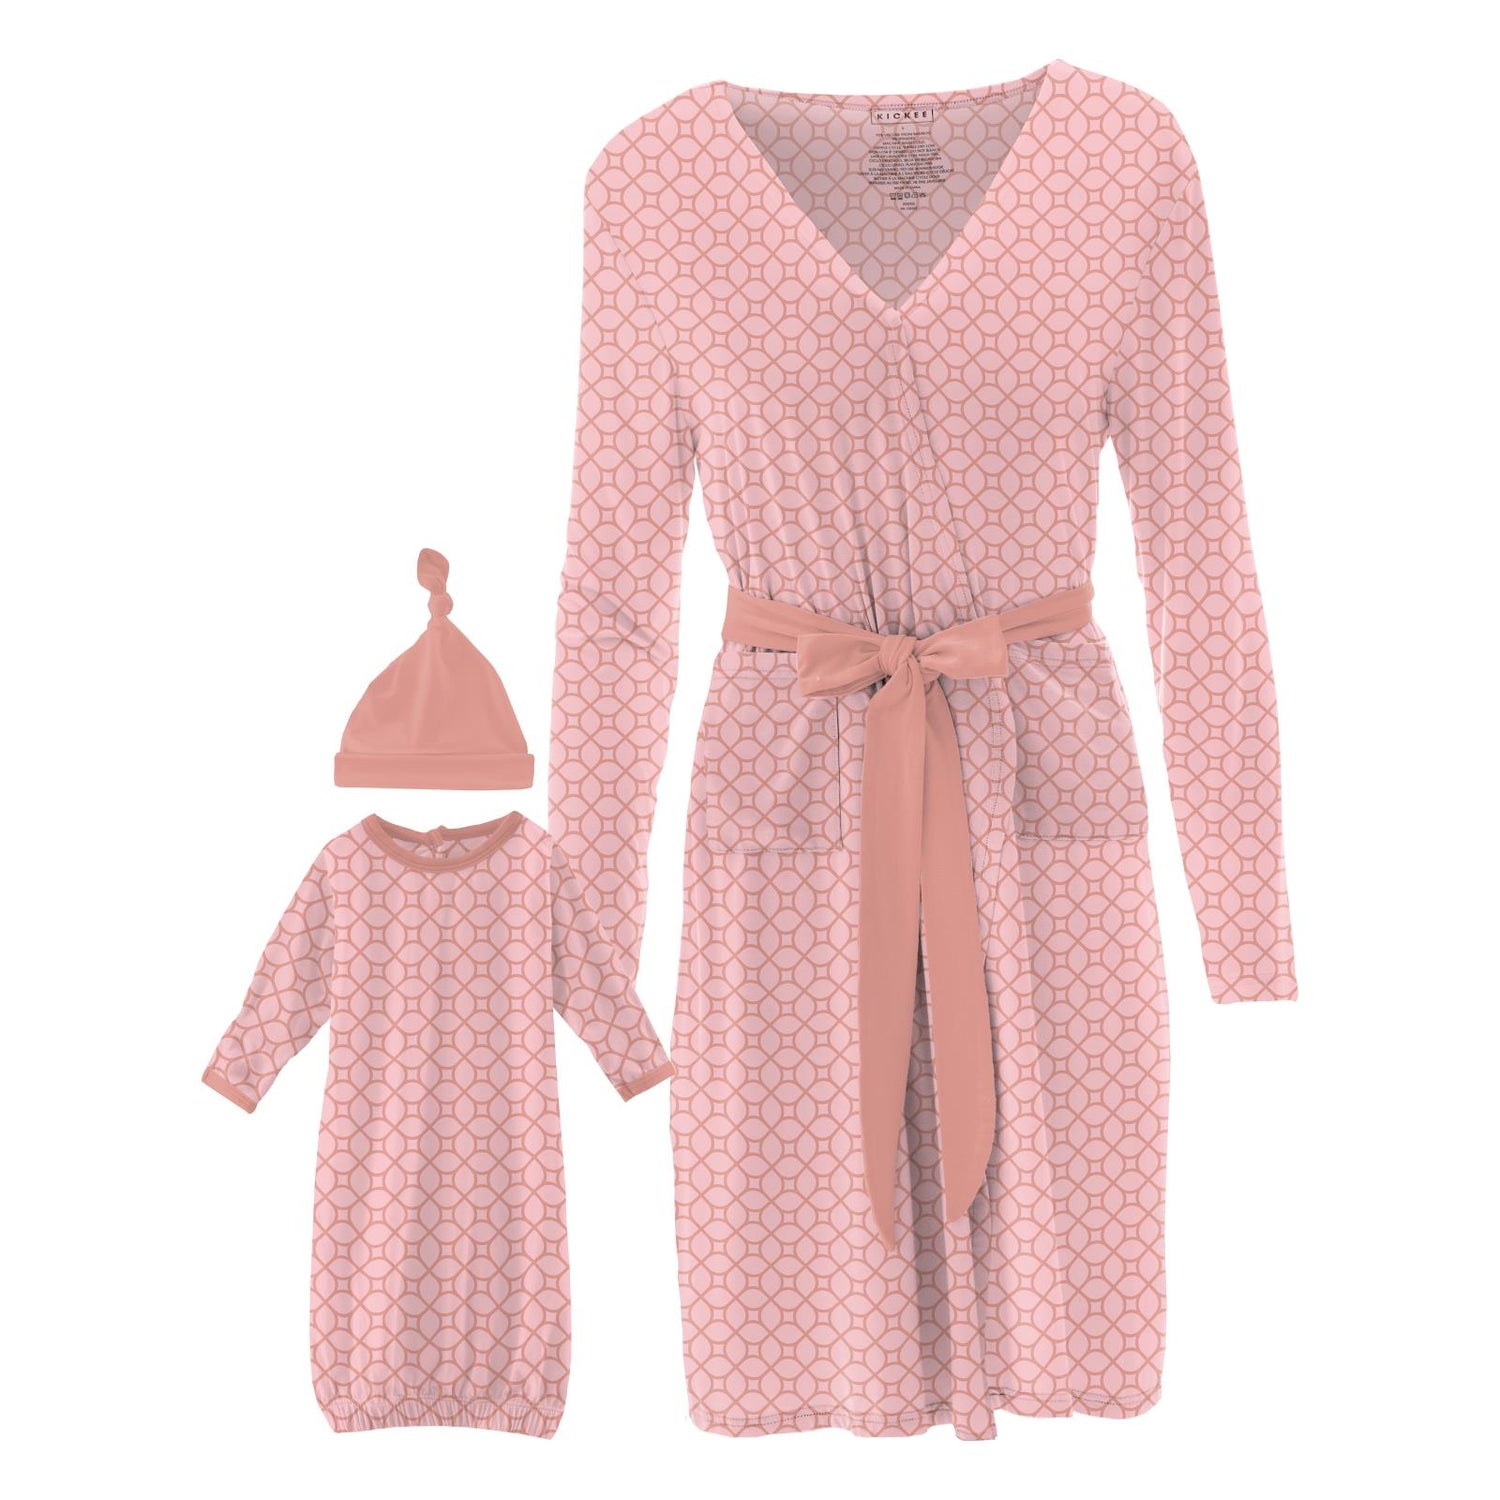 Women's Maternity/Nursing Robe & Layette Gown Set in Blush Spring Lattice